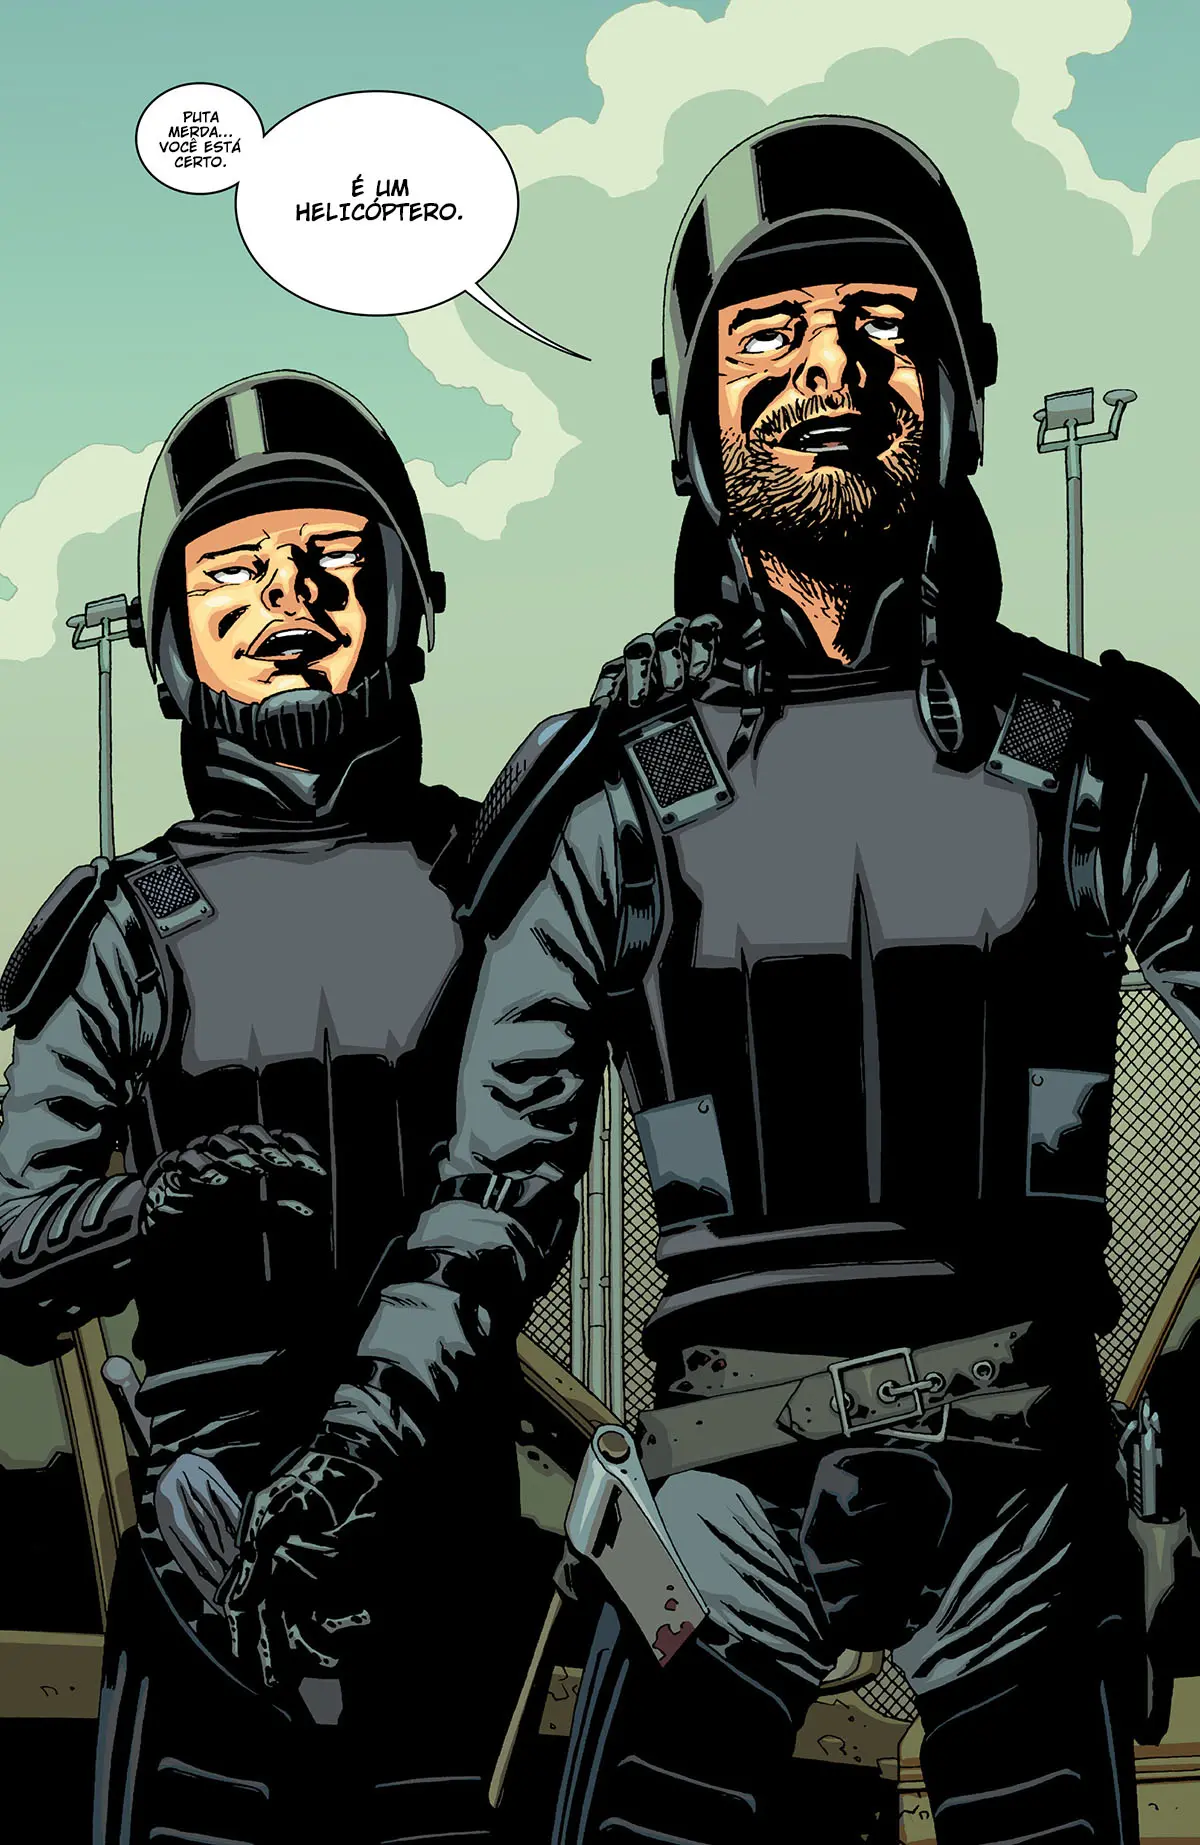 Rick e Glenn surpresos vendo um helicóptero na edição 25 da The Walking Dead Deluxe.